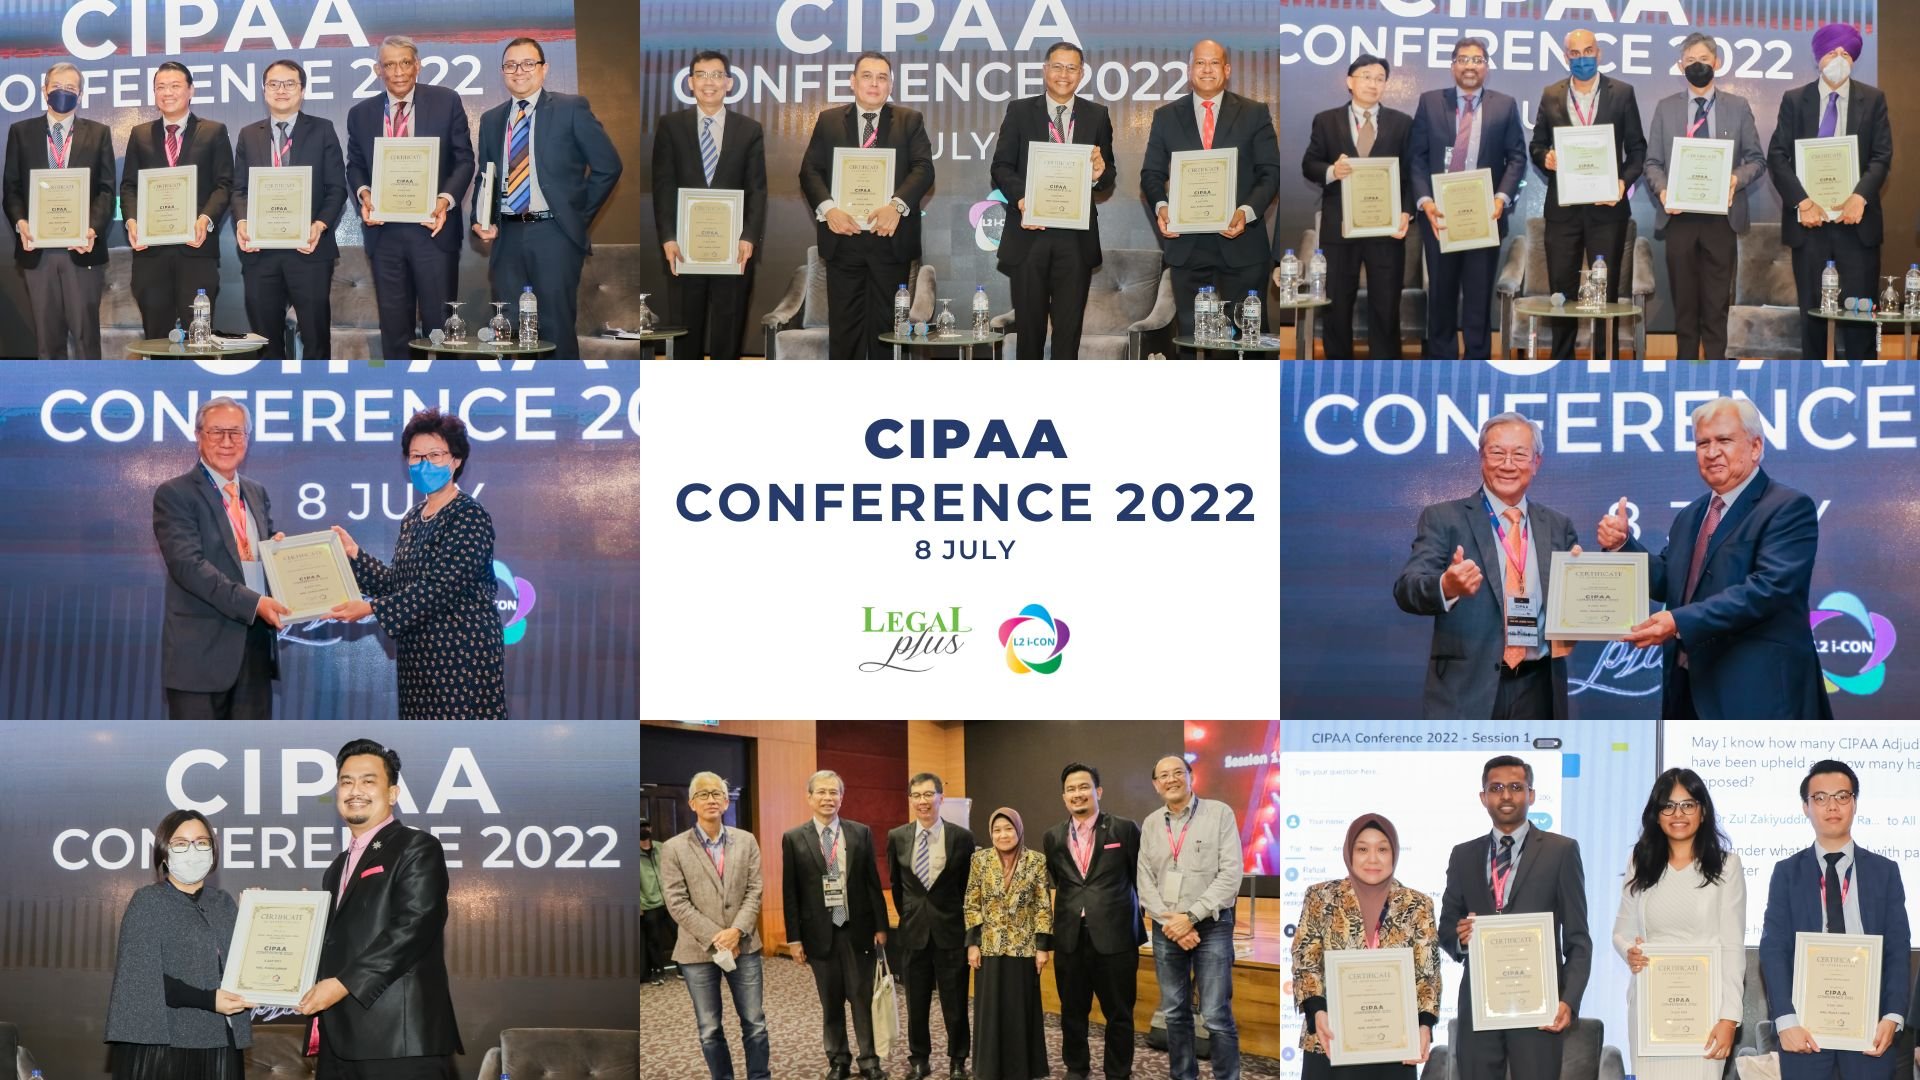 CIPAA Conference 2022